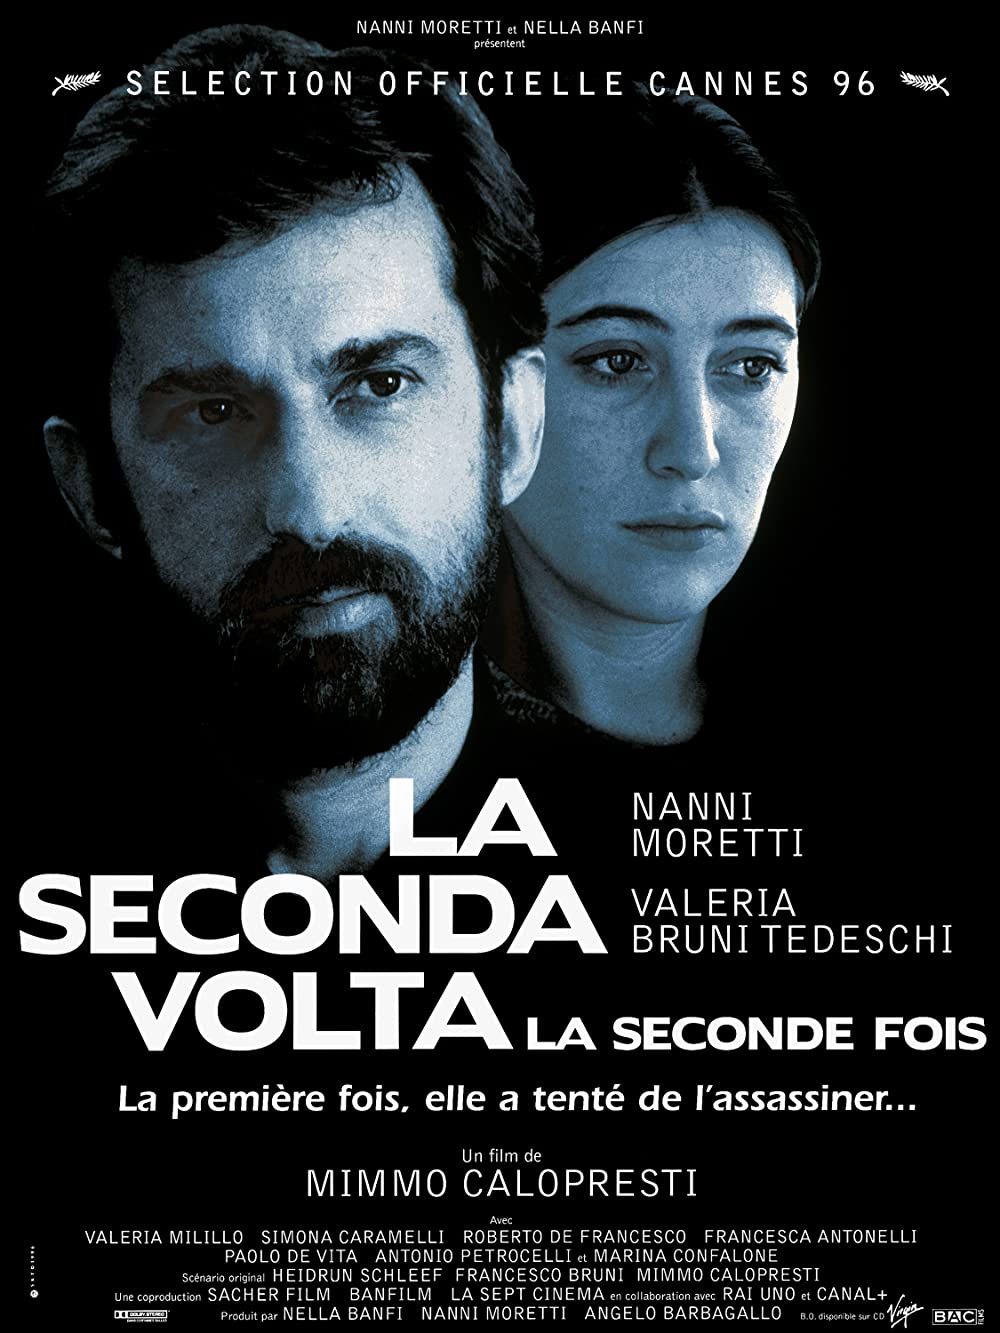 Filmbeschreibung zu La Seconda Volta (OV)